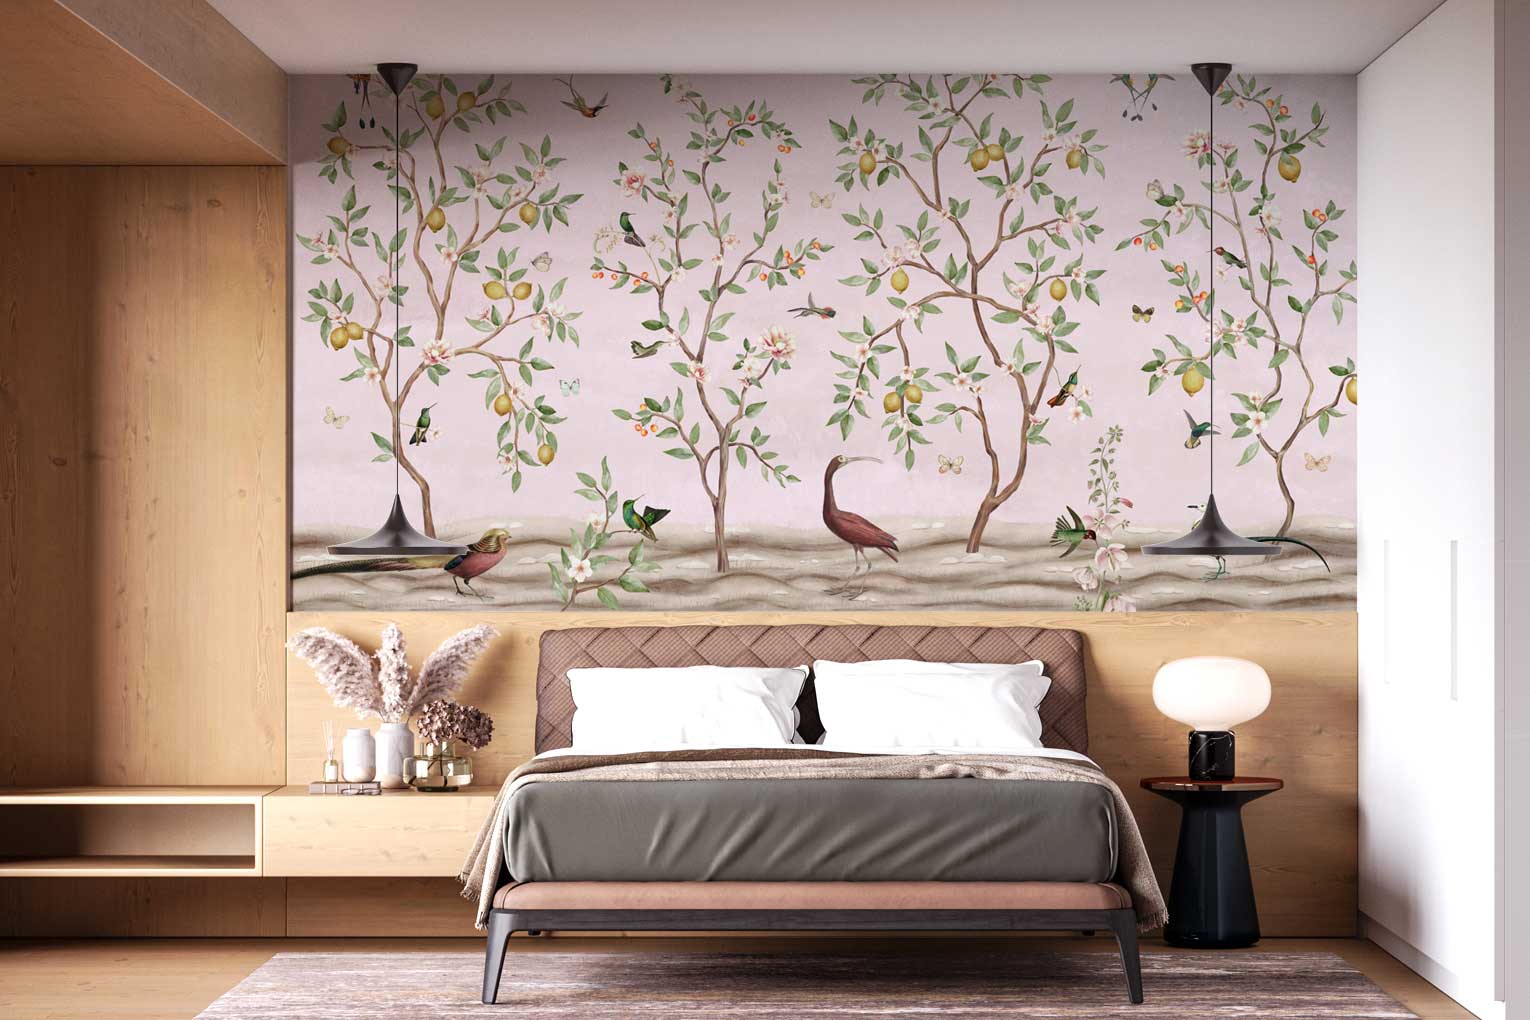 Chinoiserie Wallpaper Mural Birds Branches Blossom Art Removable Textured  Vinyl  eBay